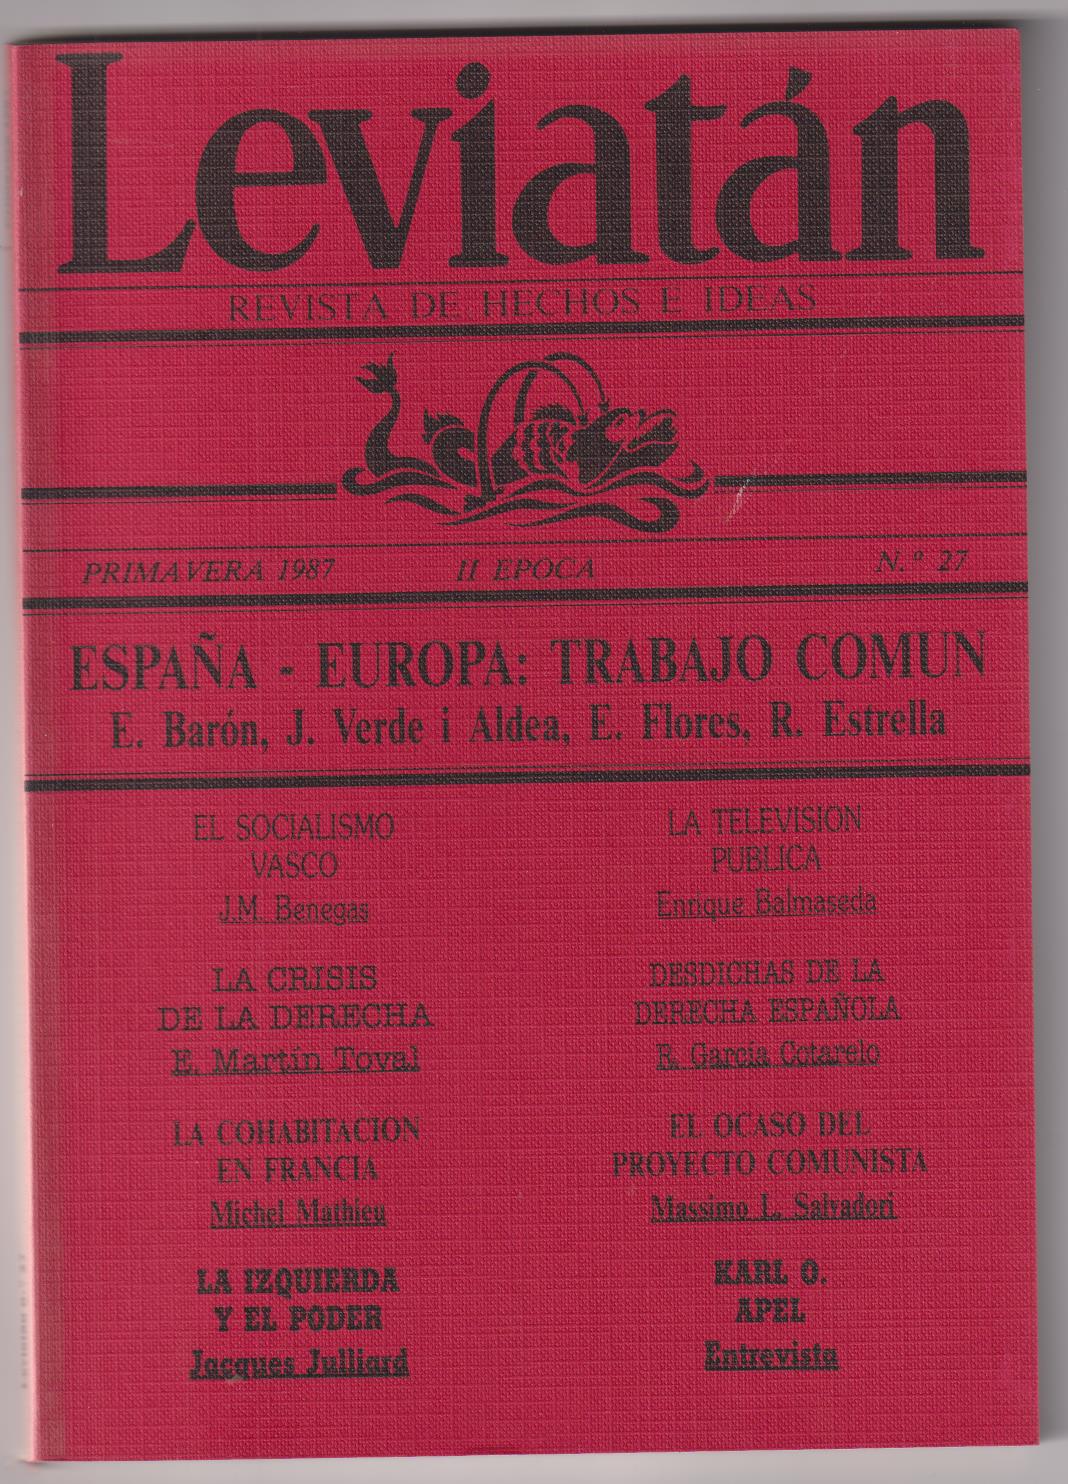 Leviatán nº 27. Revista de Hechos e Ideas. Primavera 1987